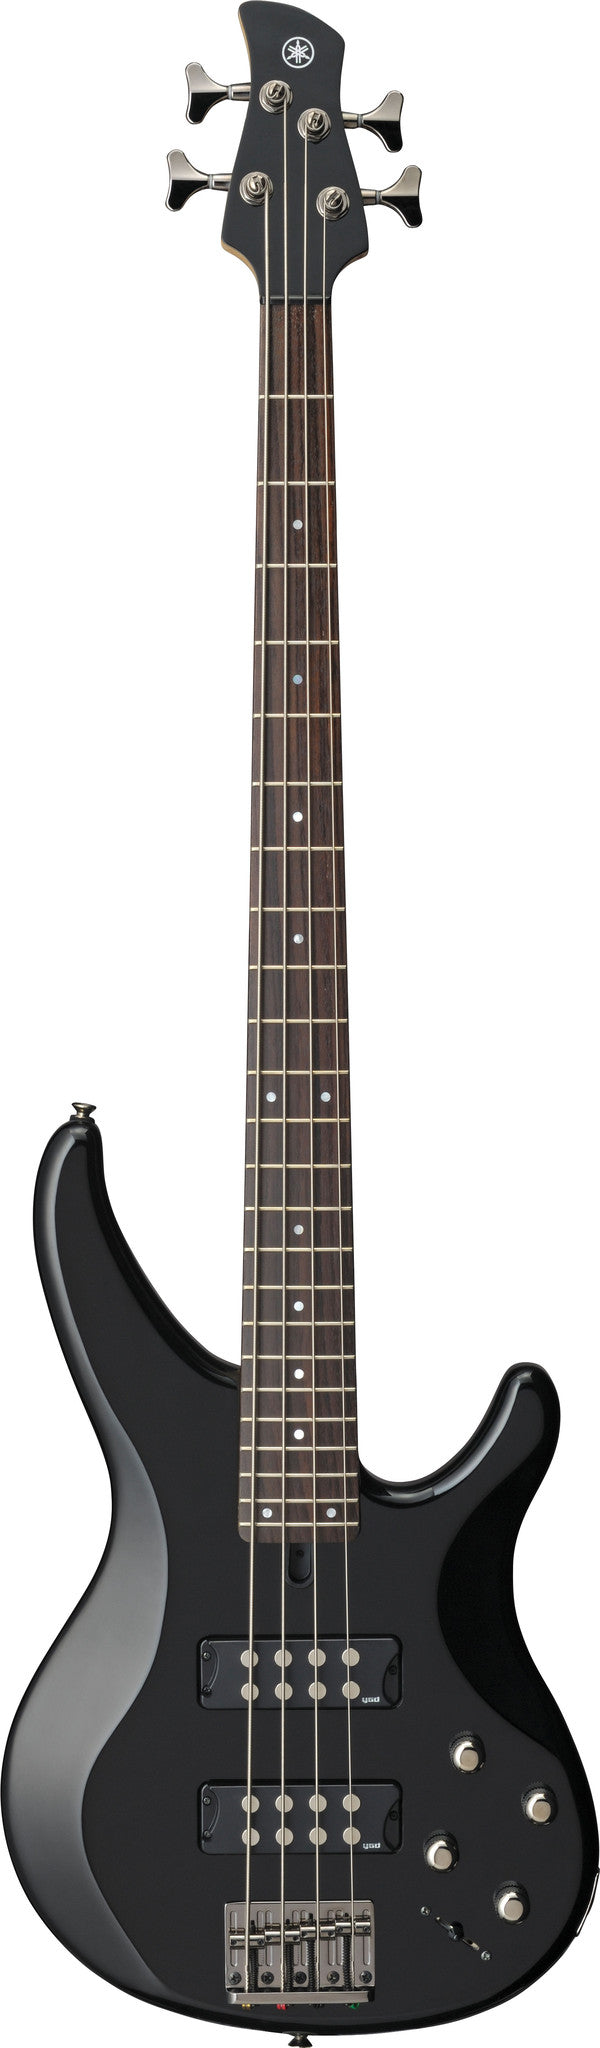 Yamaha TRBX304 4-String Bass Guitar Black